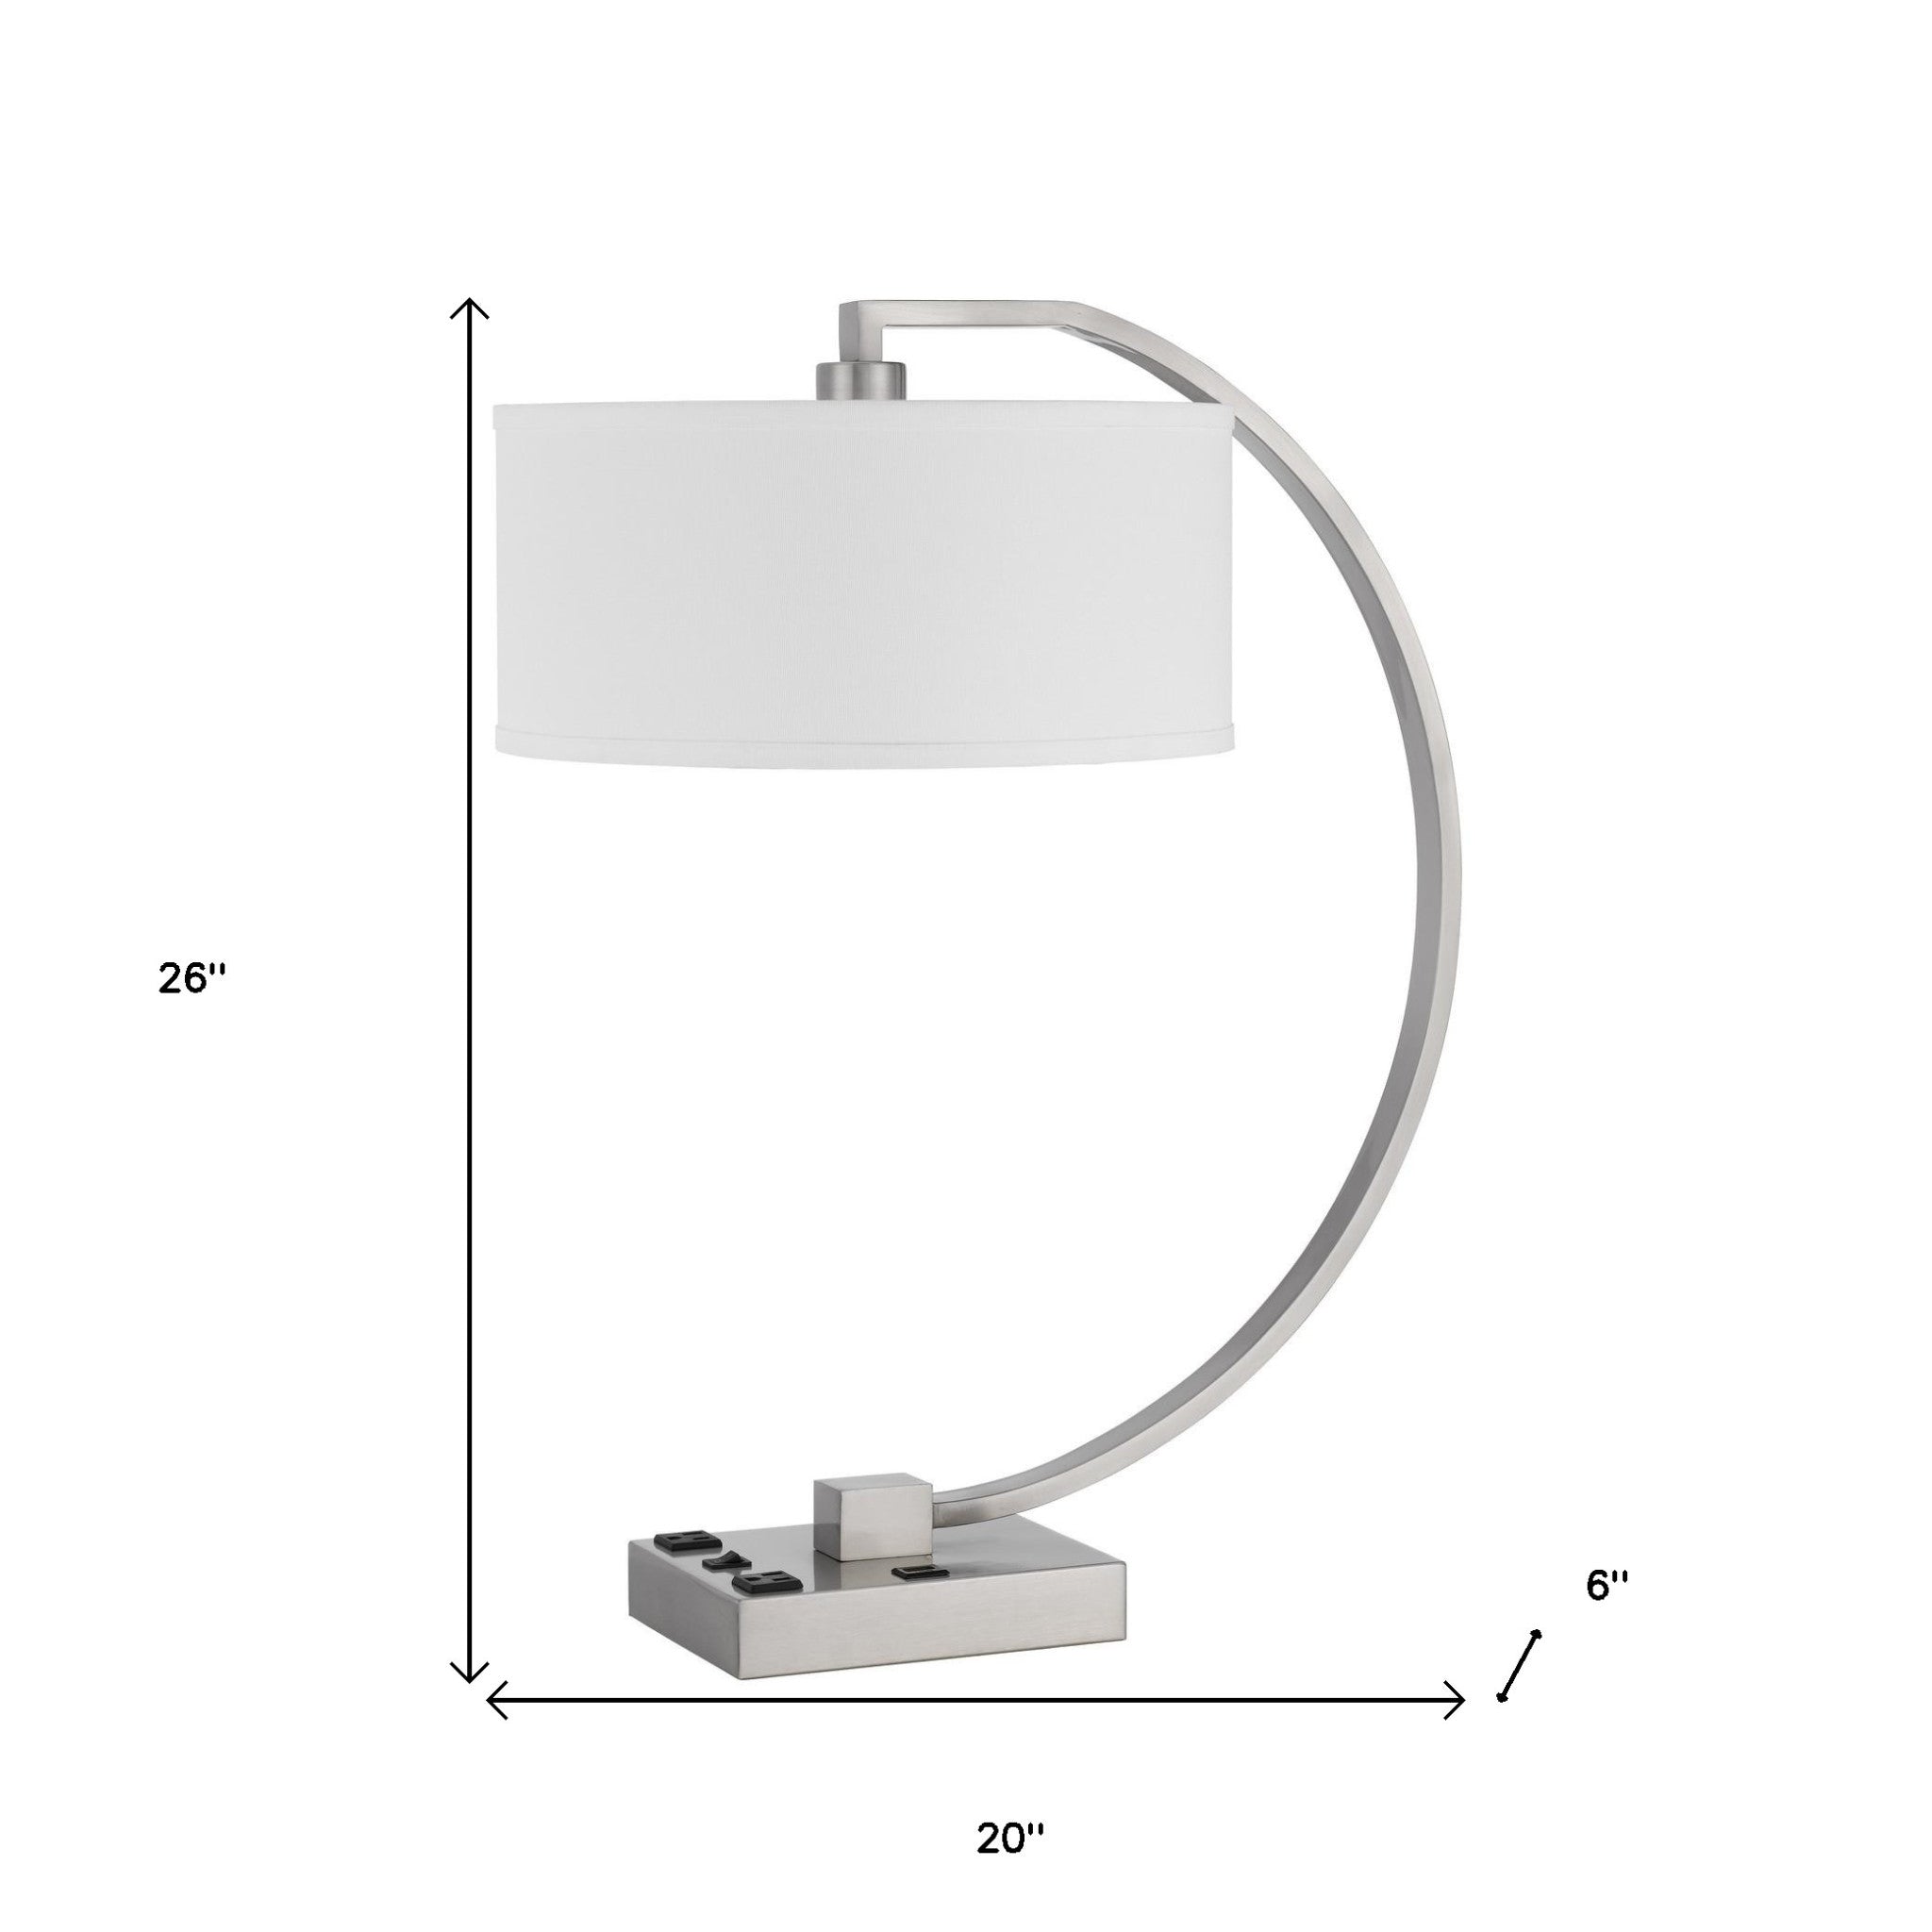 26" Nickel Metal Desk Usb Table Lamp With White Rectangular Shade